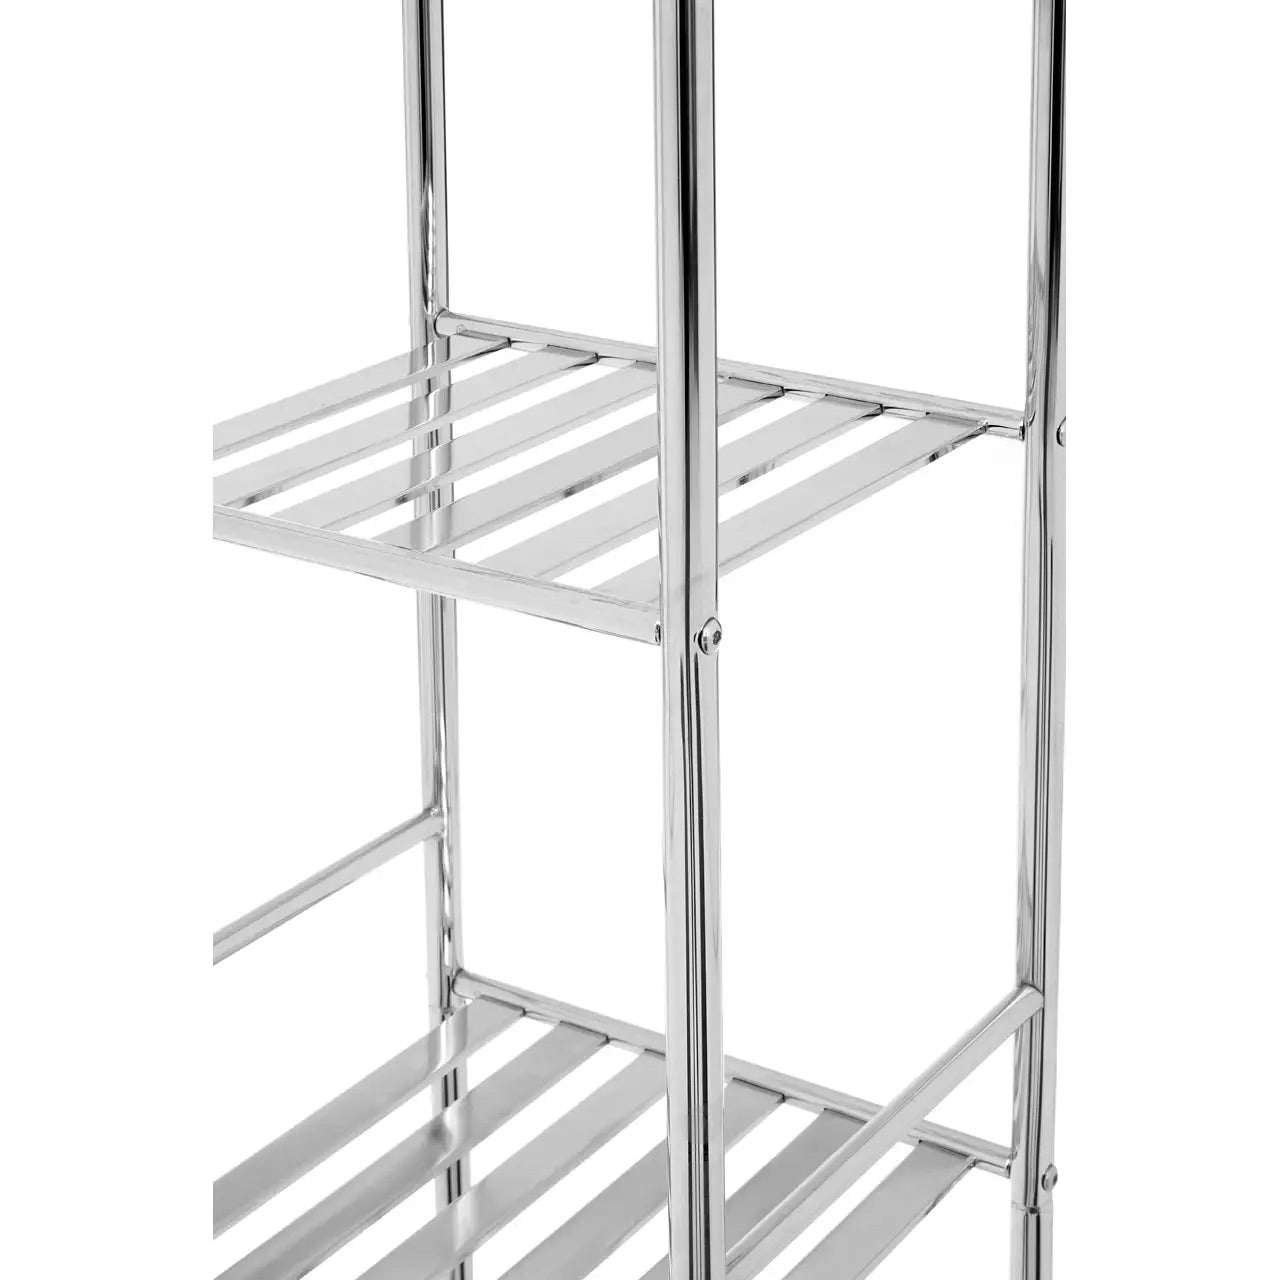 5 Tier Chrome Shelf Unit With Basket